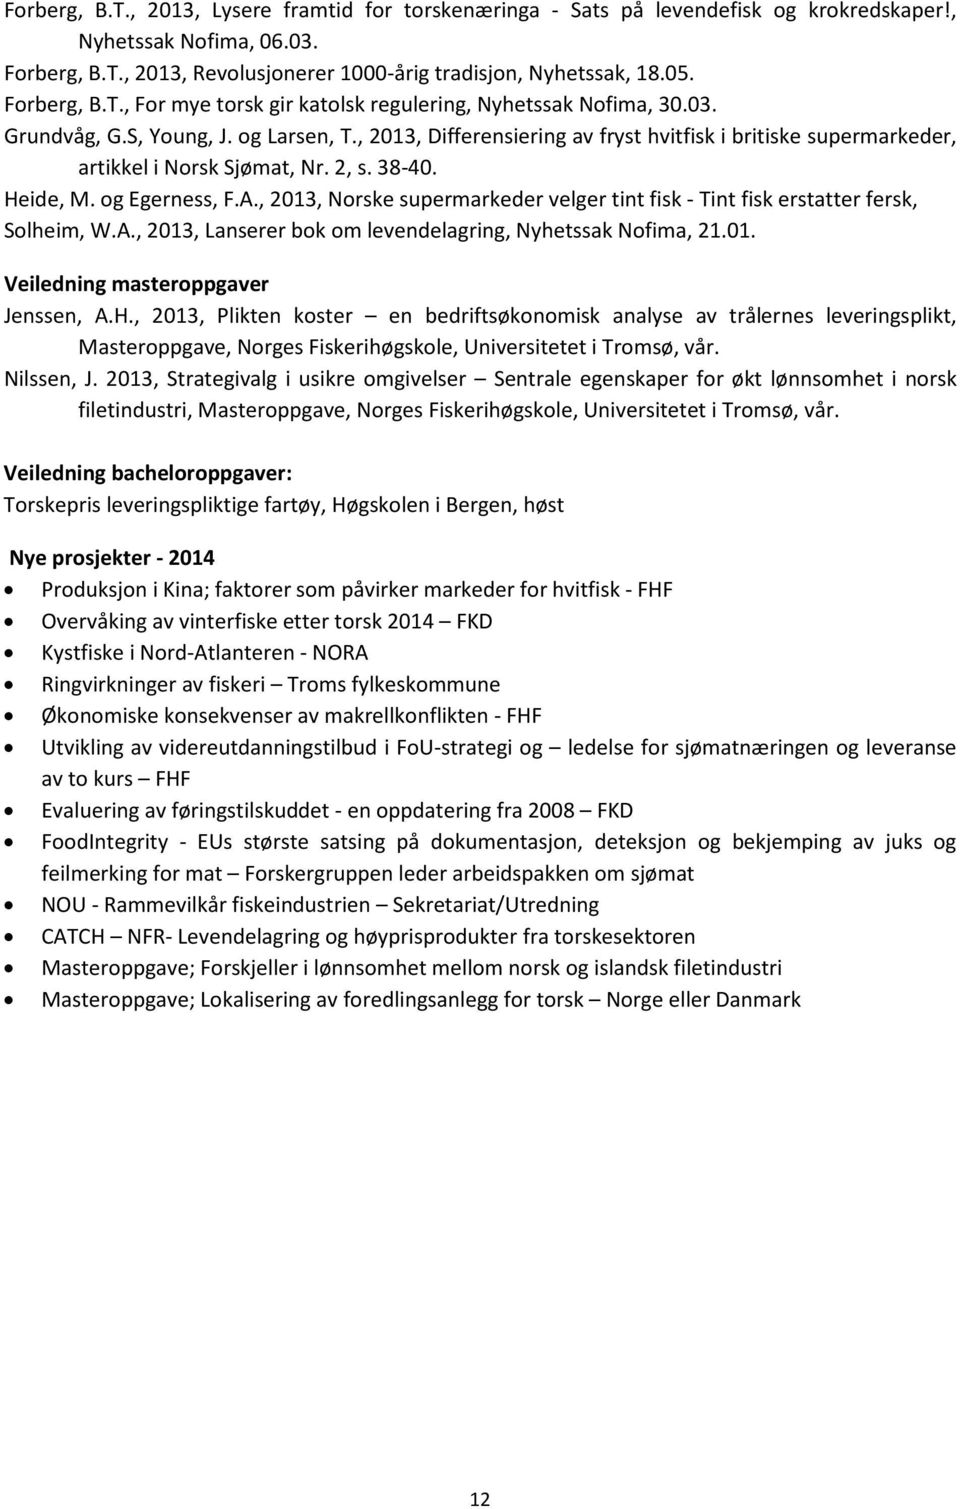 , 2013, Differensiering av fryst hvitfisk i britiske supermarkeder, artikkel i Norsk Sjømat, Nr. 2, s. 38-40. Heide, M. og Egerness, F.A.